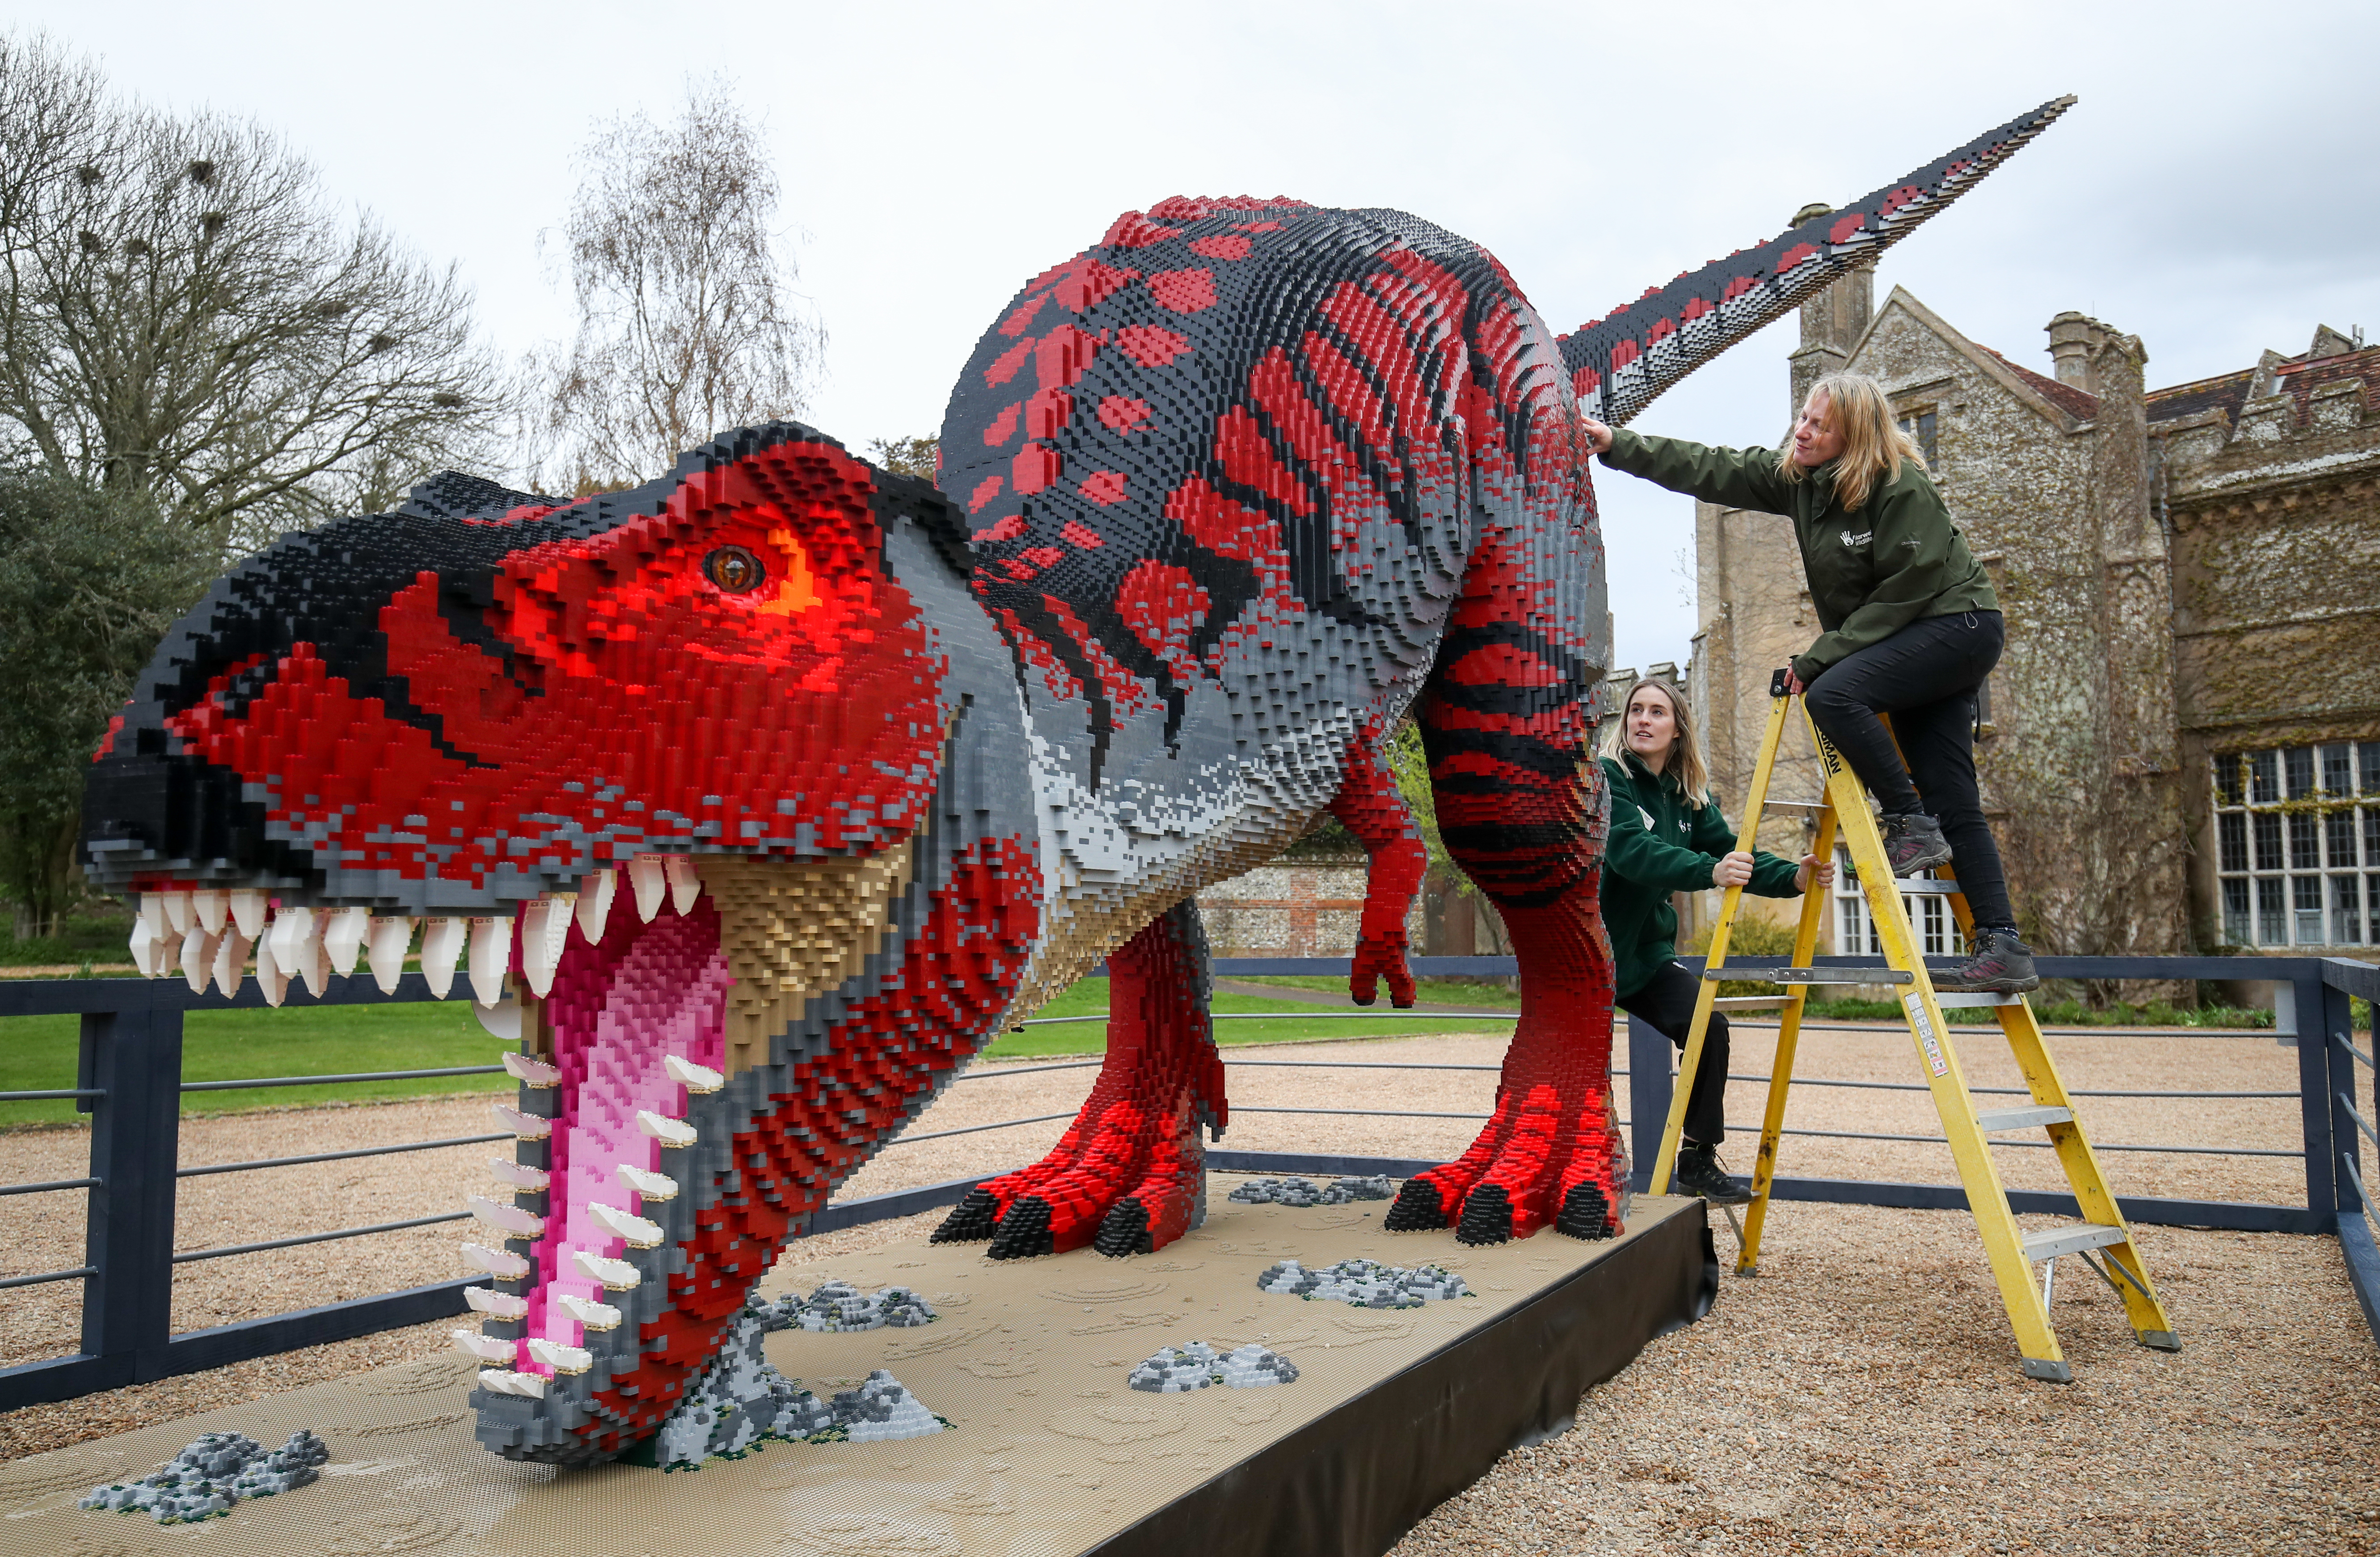 marwell zoo lego dinosaurs